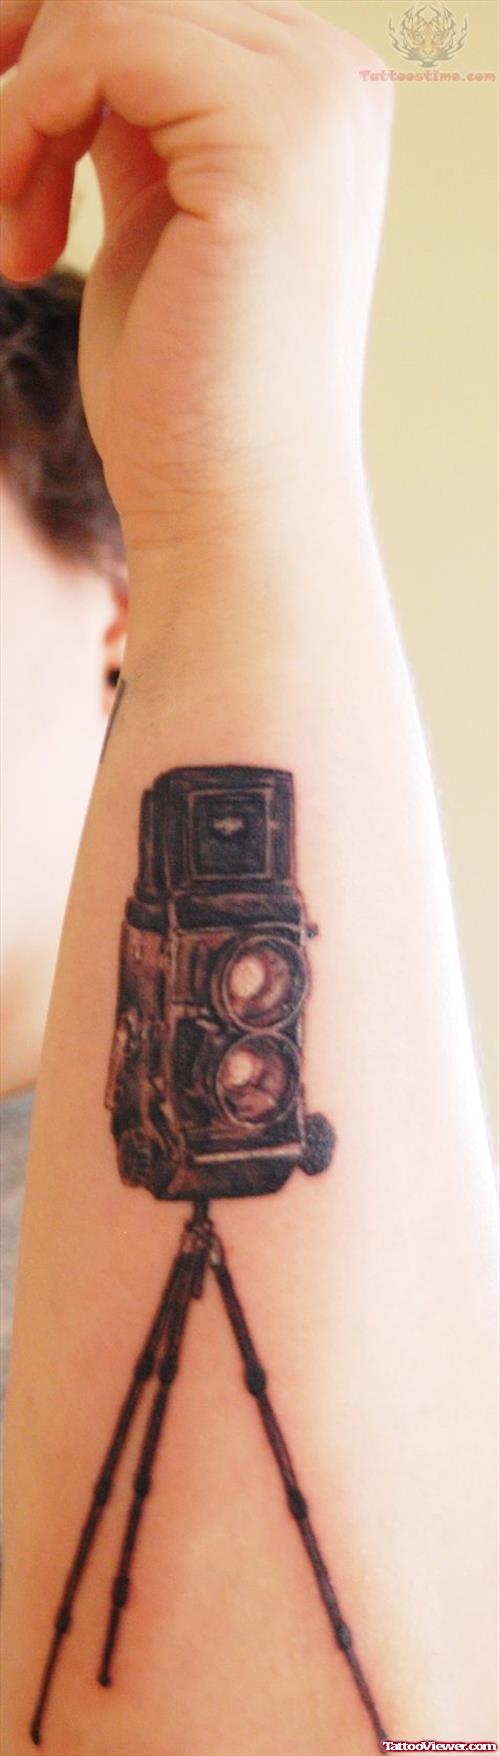 Video Camera Tattoo On Arm